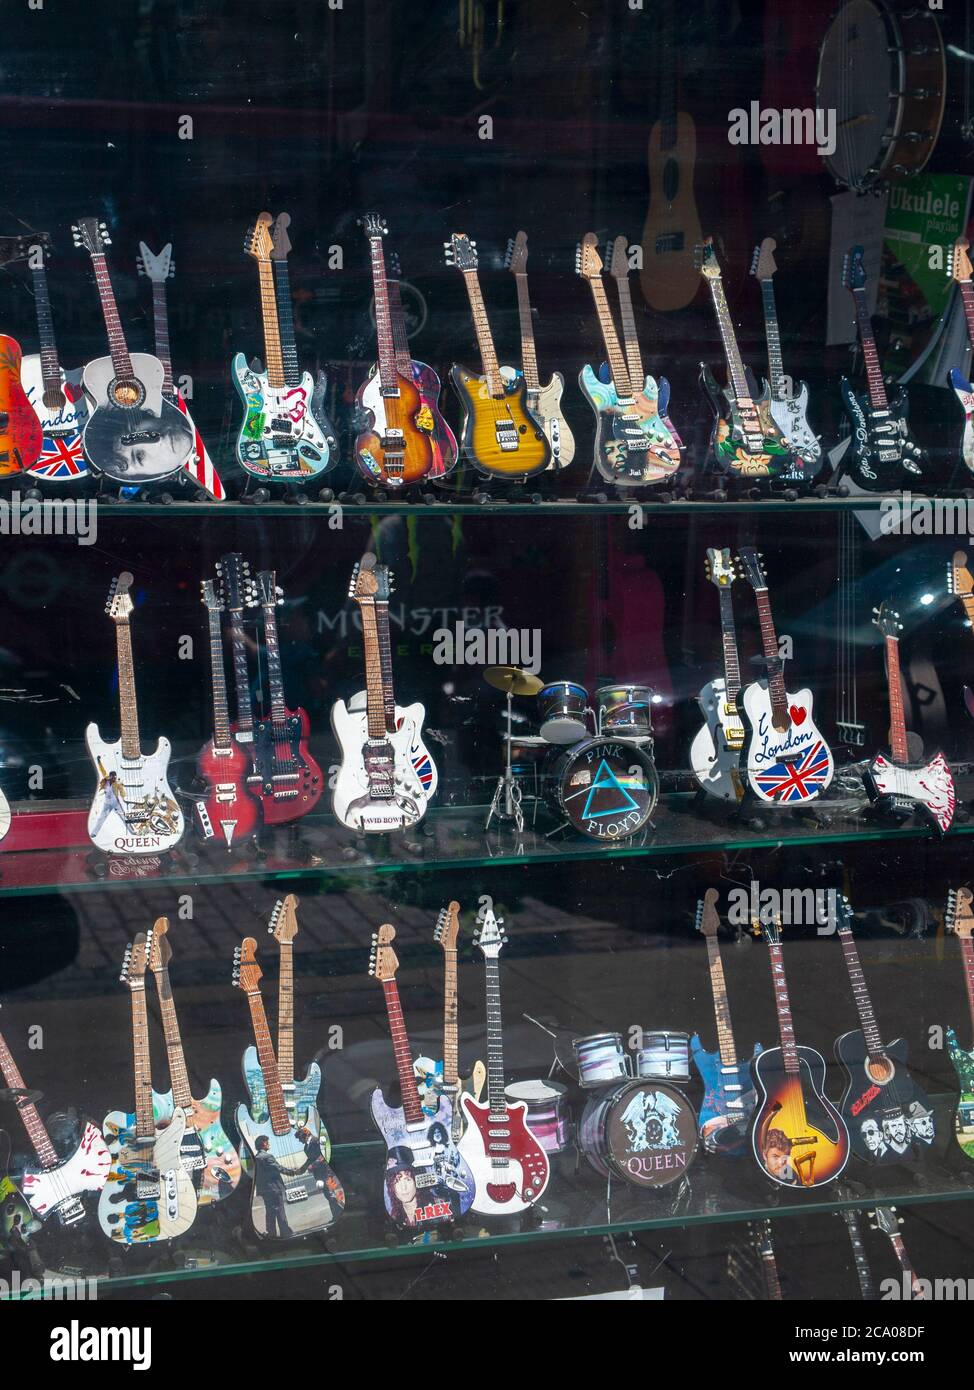 Miniature guitars in a guitar shop window display, Camden, London, U.K. Stock Photo